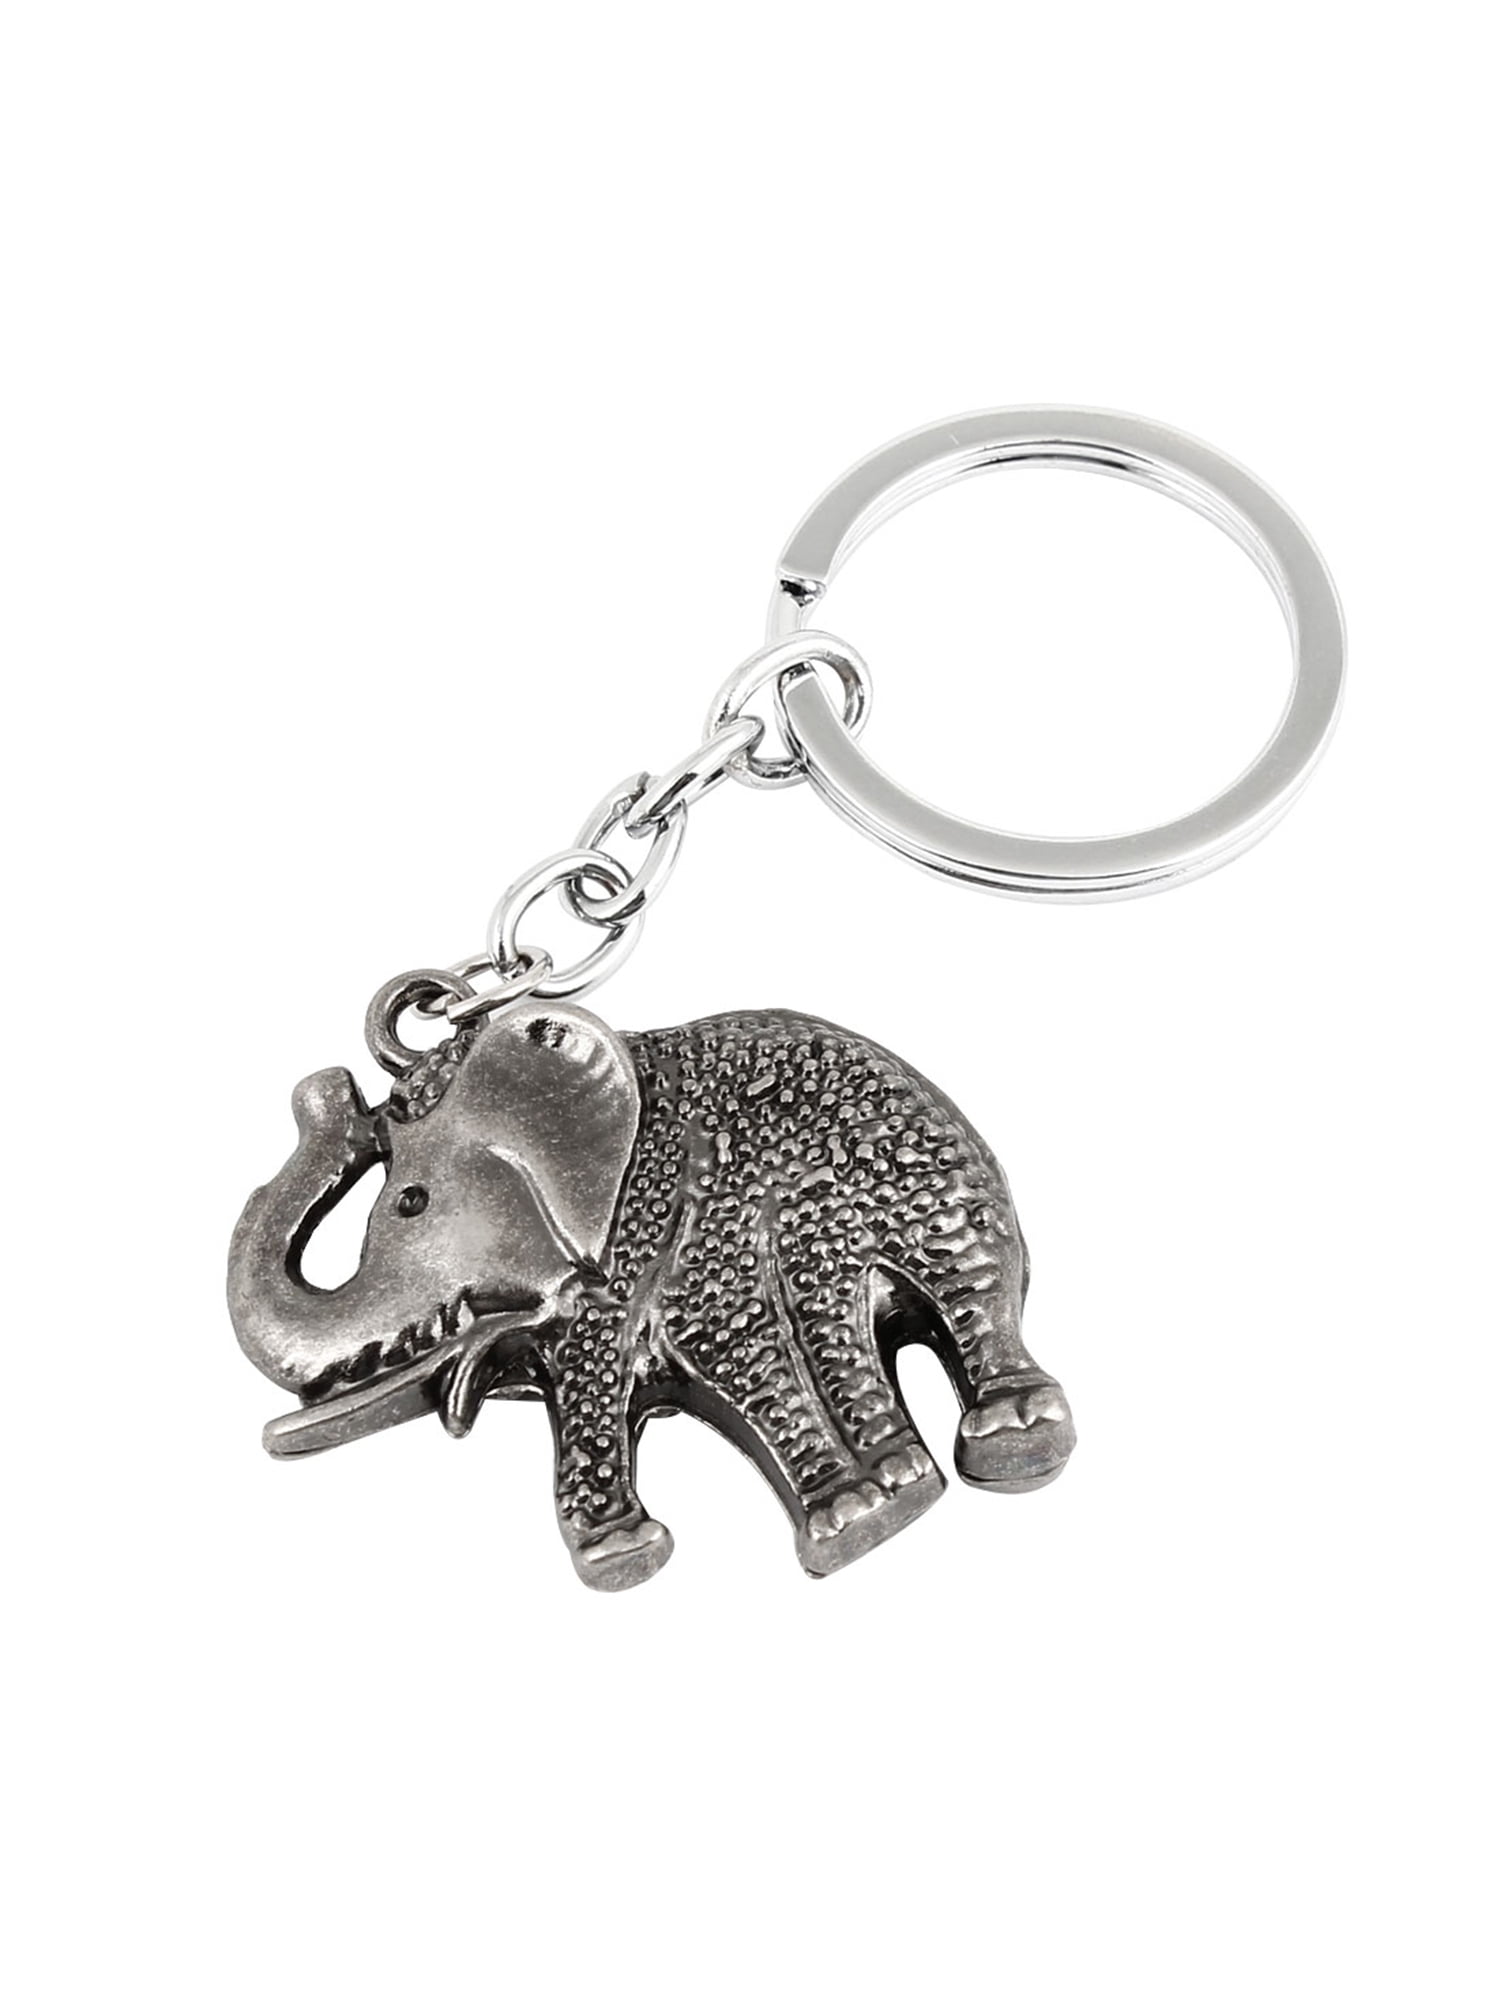 Retro Elephant Keychain KeyRing Bag Pendant Metal Gift Present Accessories 